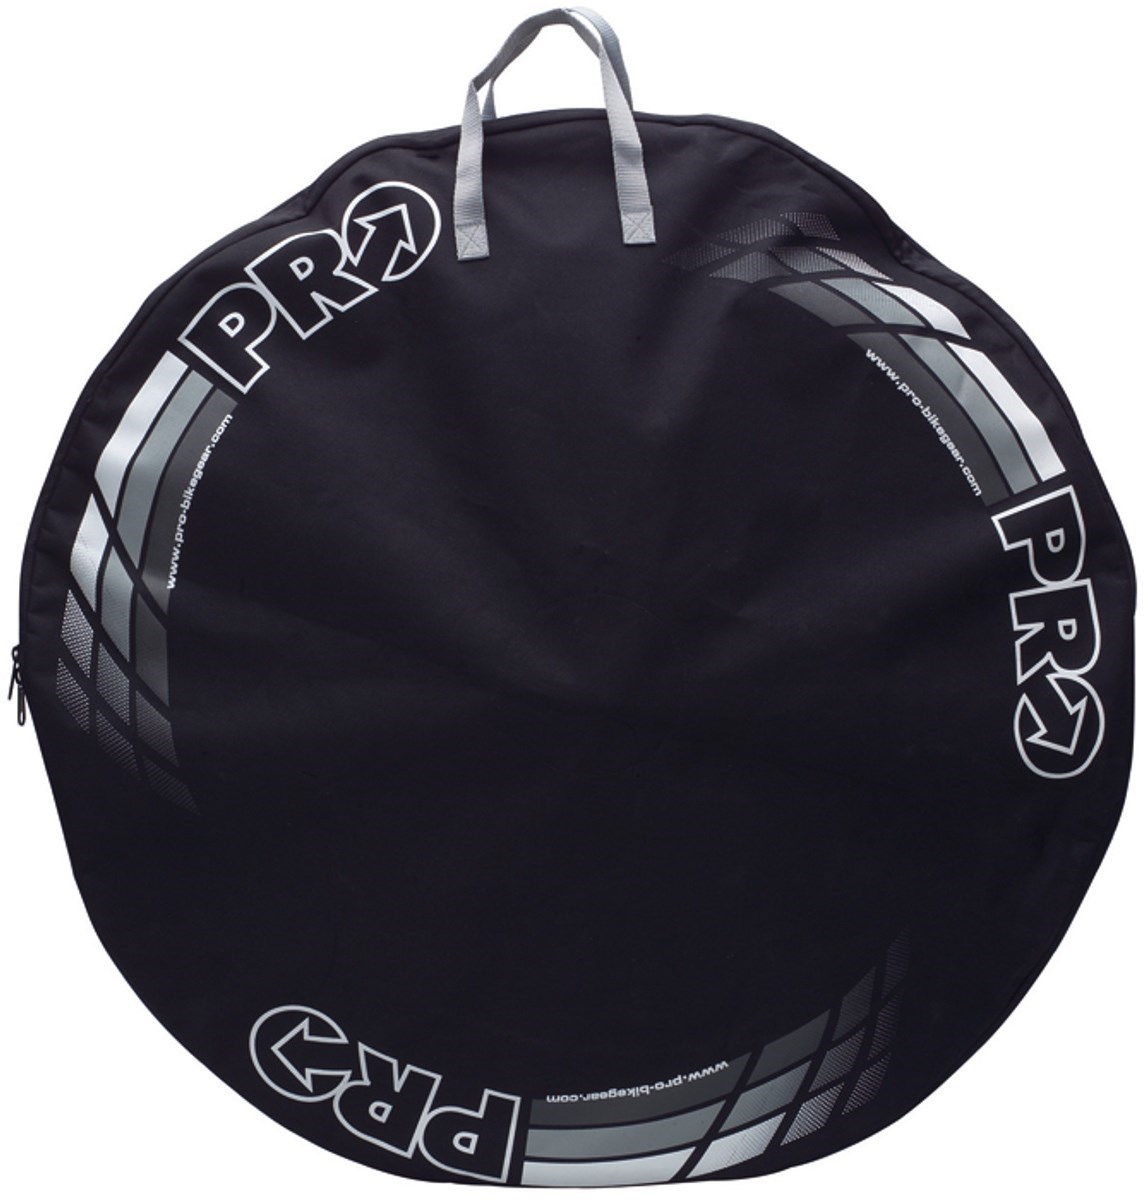 Pro Wheel Bag For 1 Wheel product image